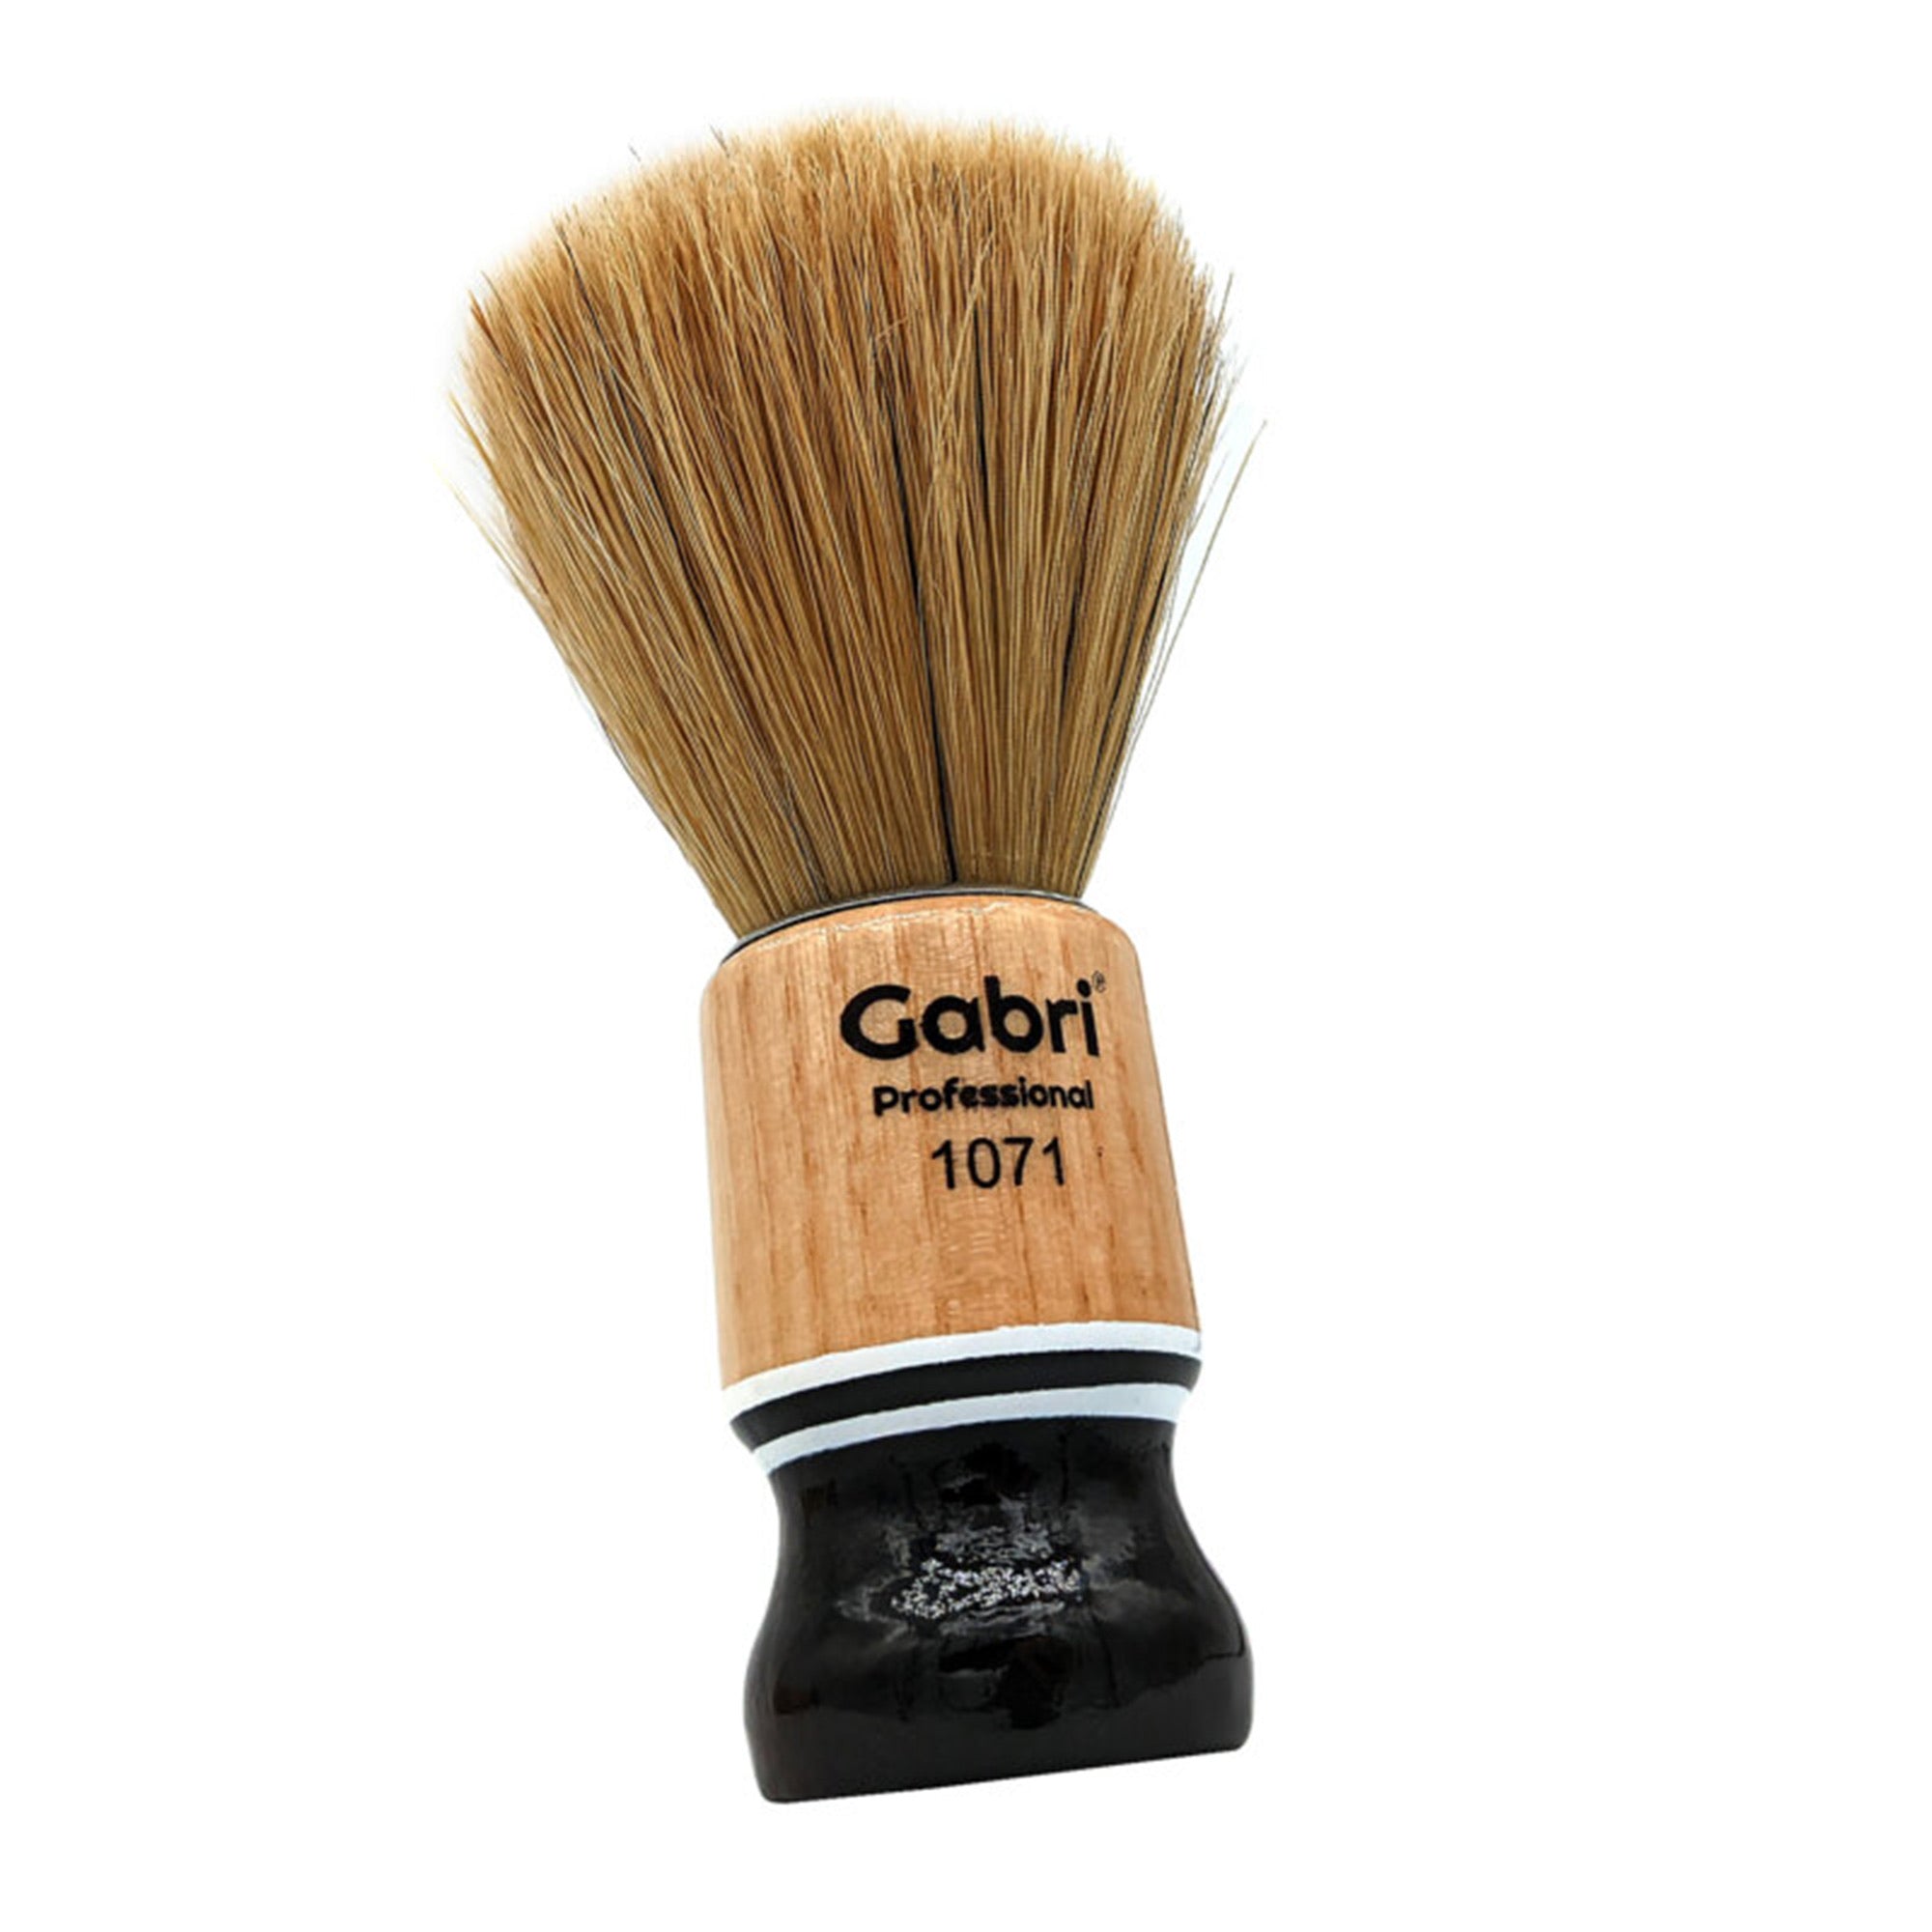 Gabri - Shaving Brush Authentic Wooden Hand Made 1071 13.5cm (Black)